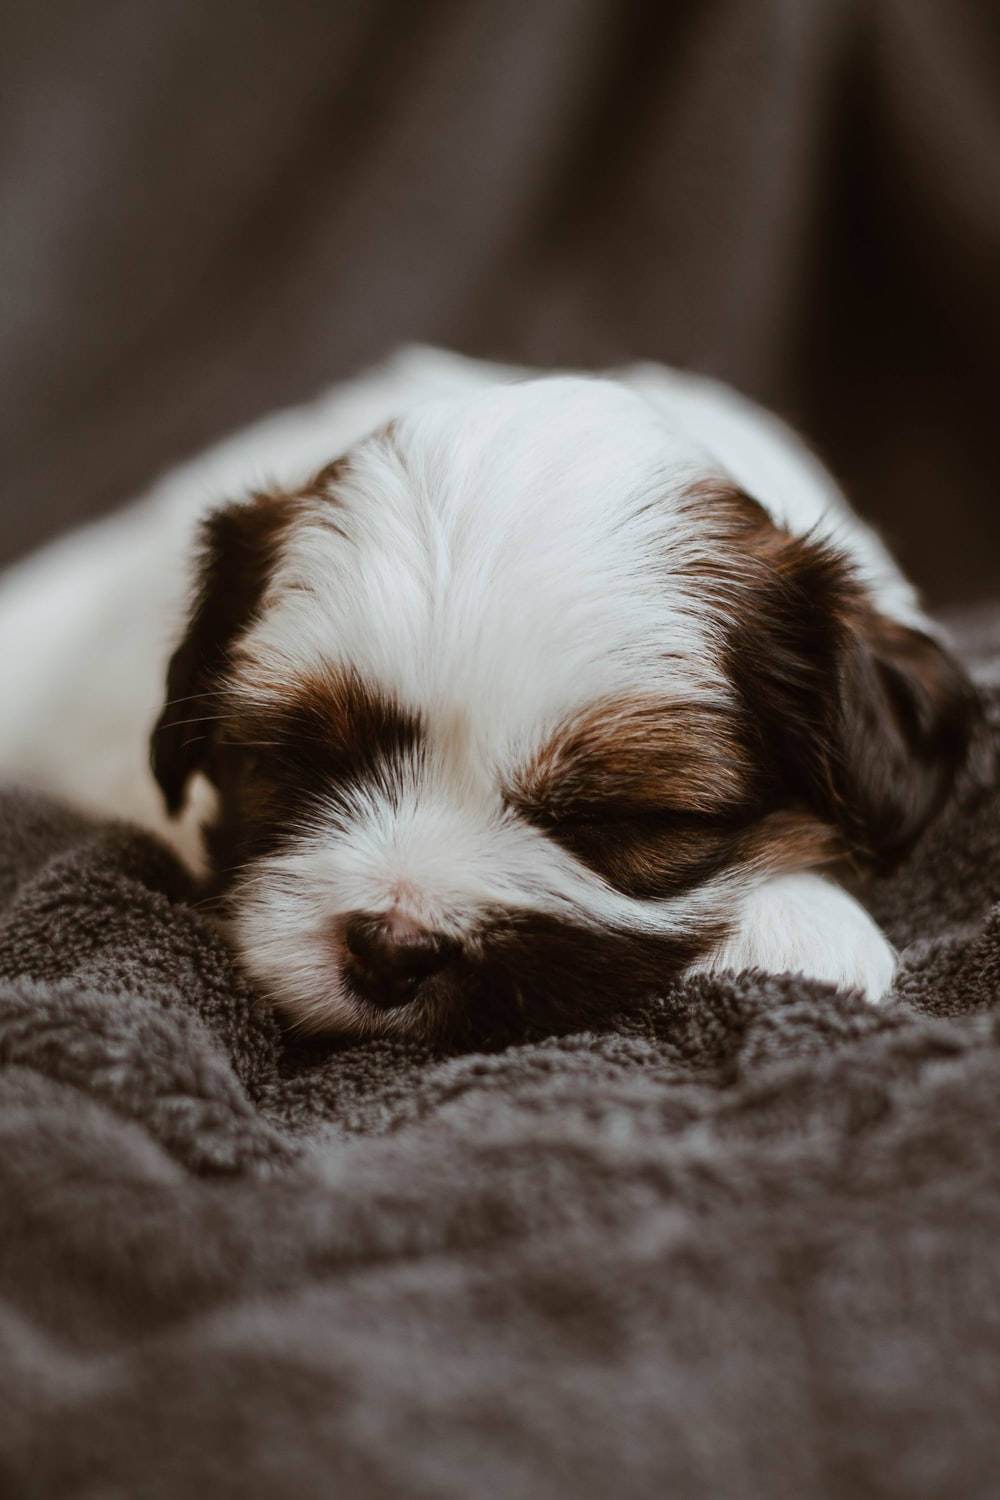 Sleeping Dog In Grey Blanket Wallpaper